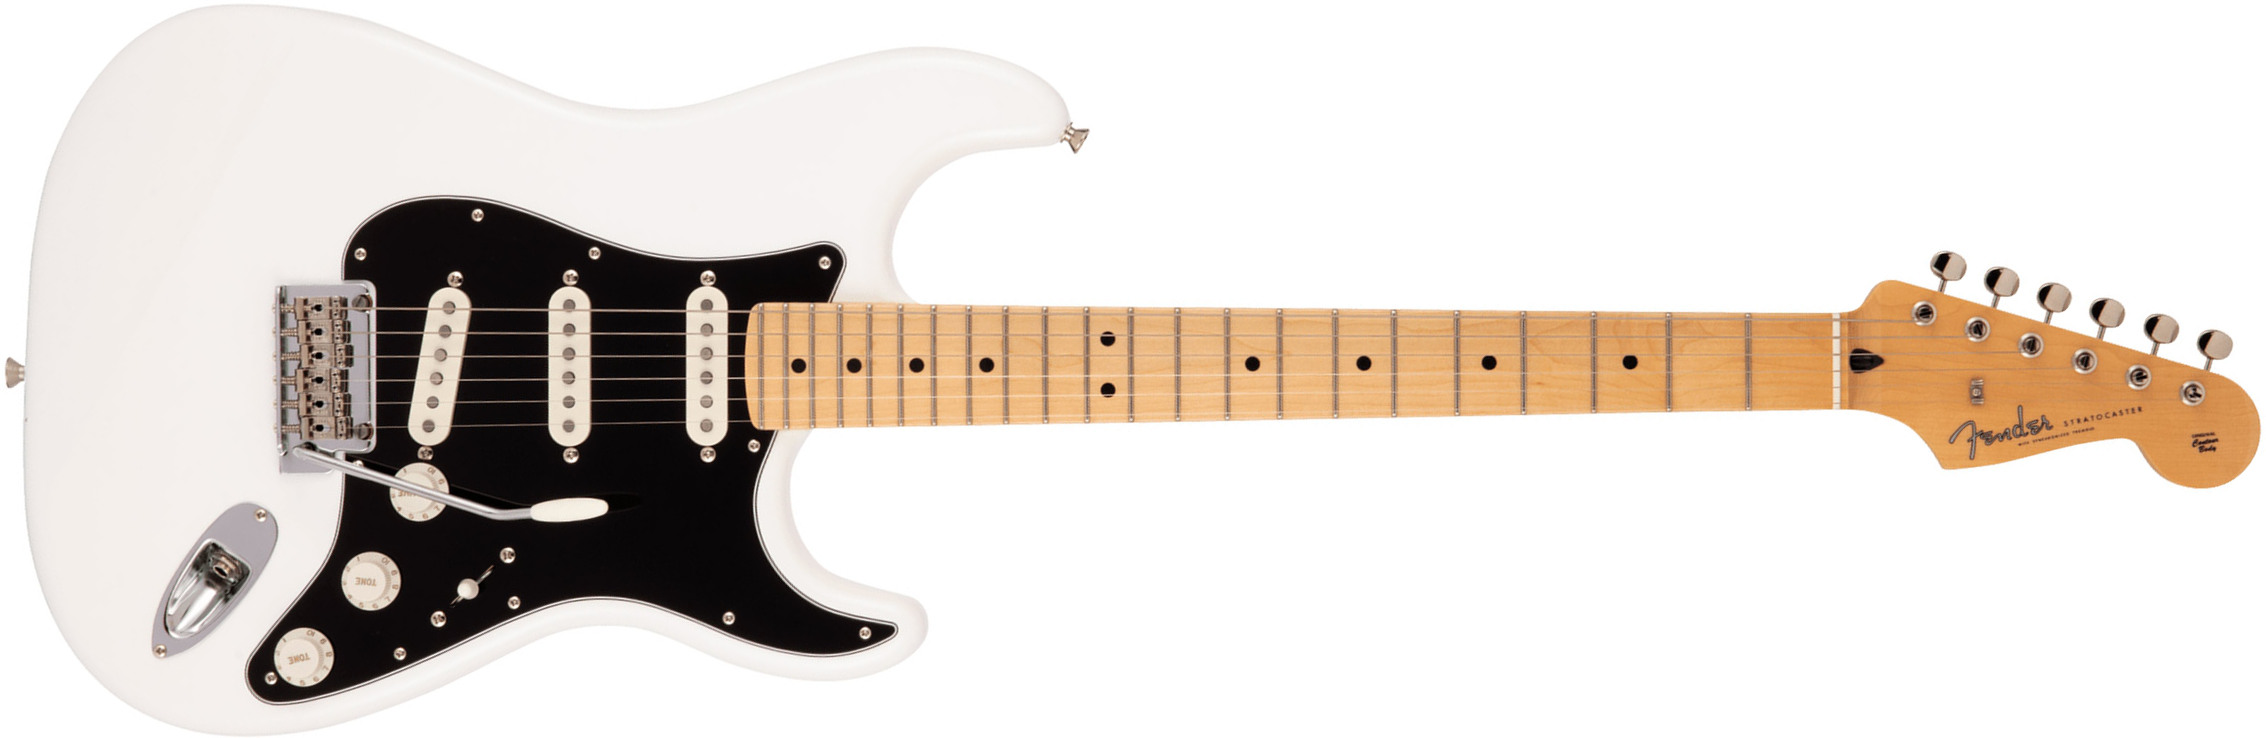 Fender Strat Hybrid Ii Mij Jap 3s Trem Mn - Arctic White - E-Gitarre in Str-Form - Main picture